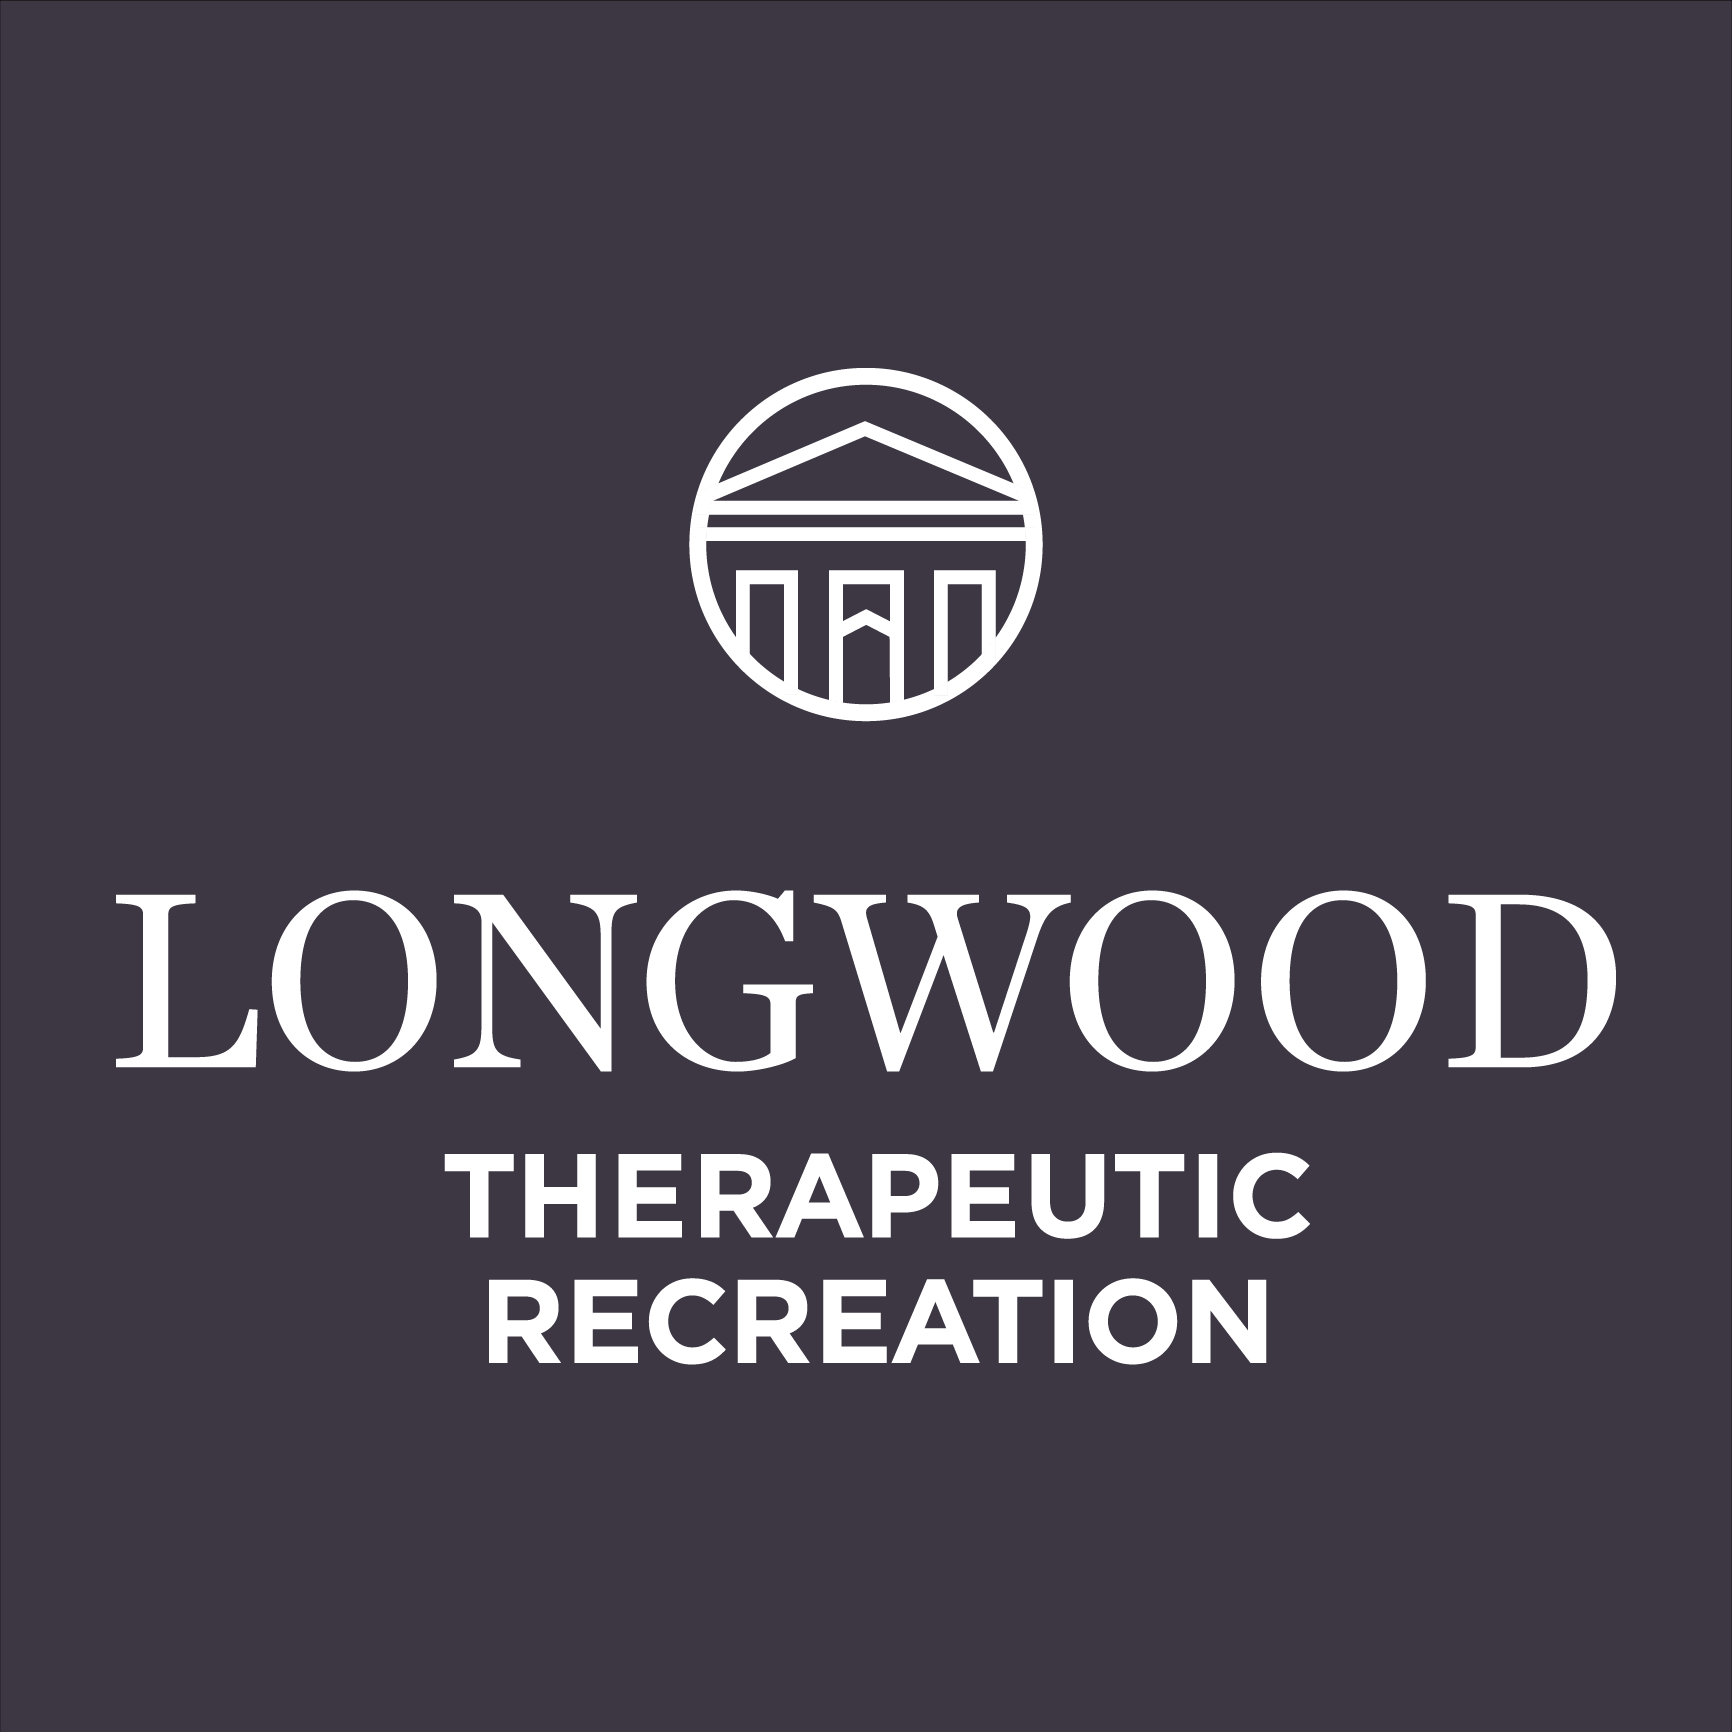 Longwood Therapeutic Recreation Organization shirt design - zoomed